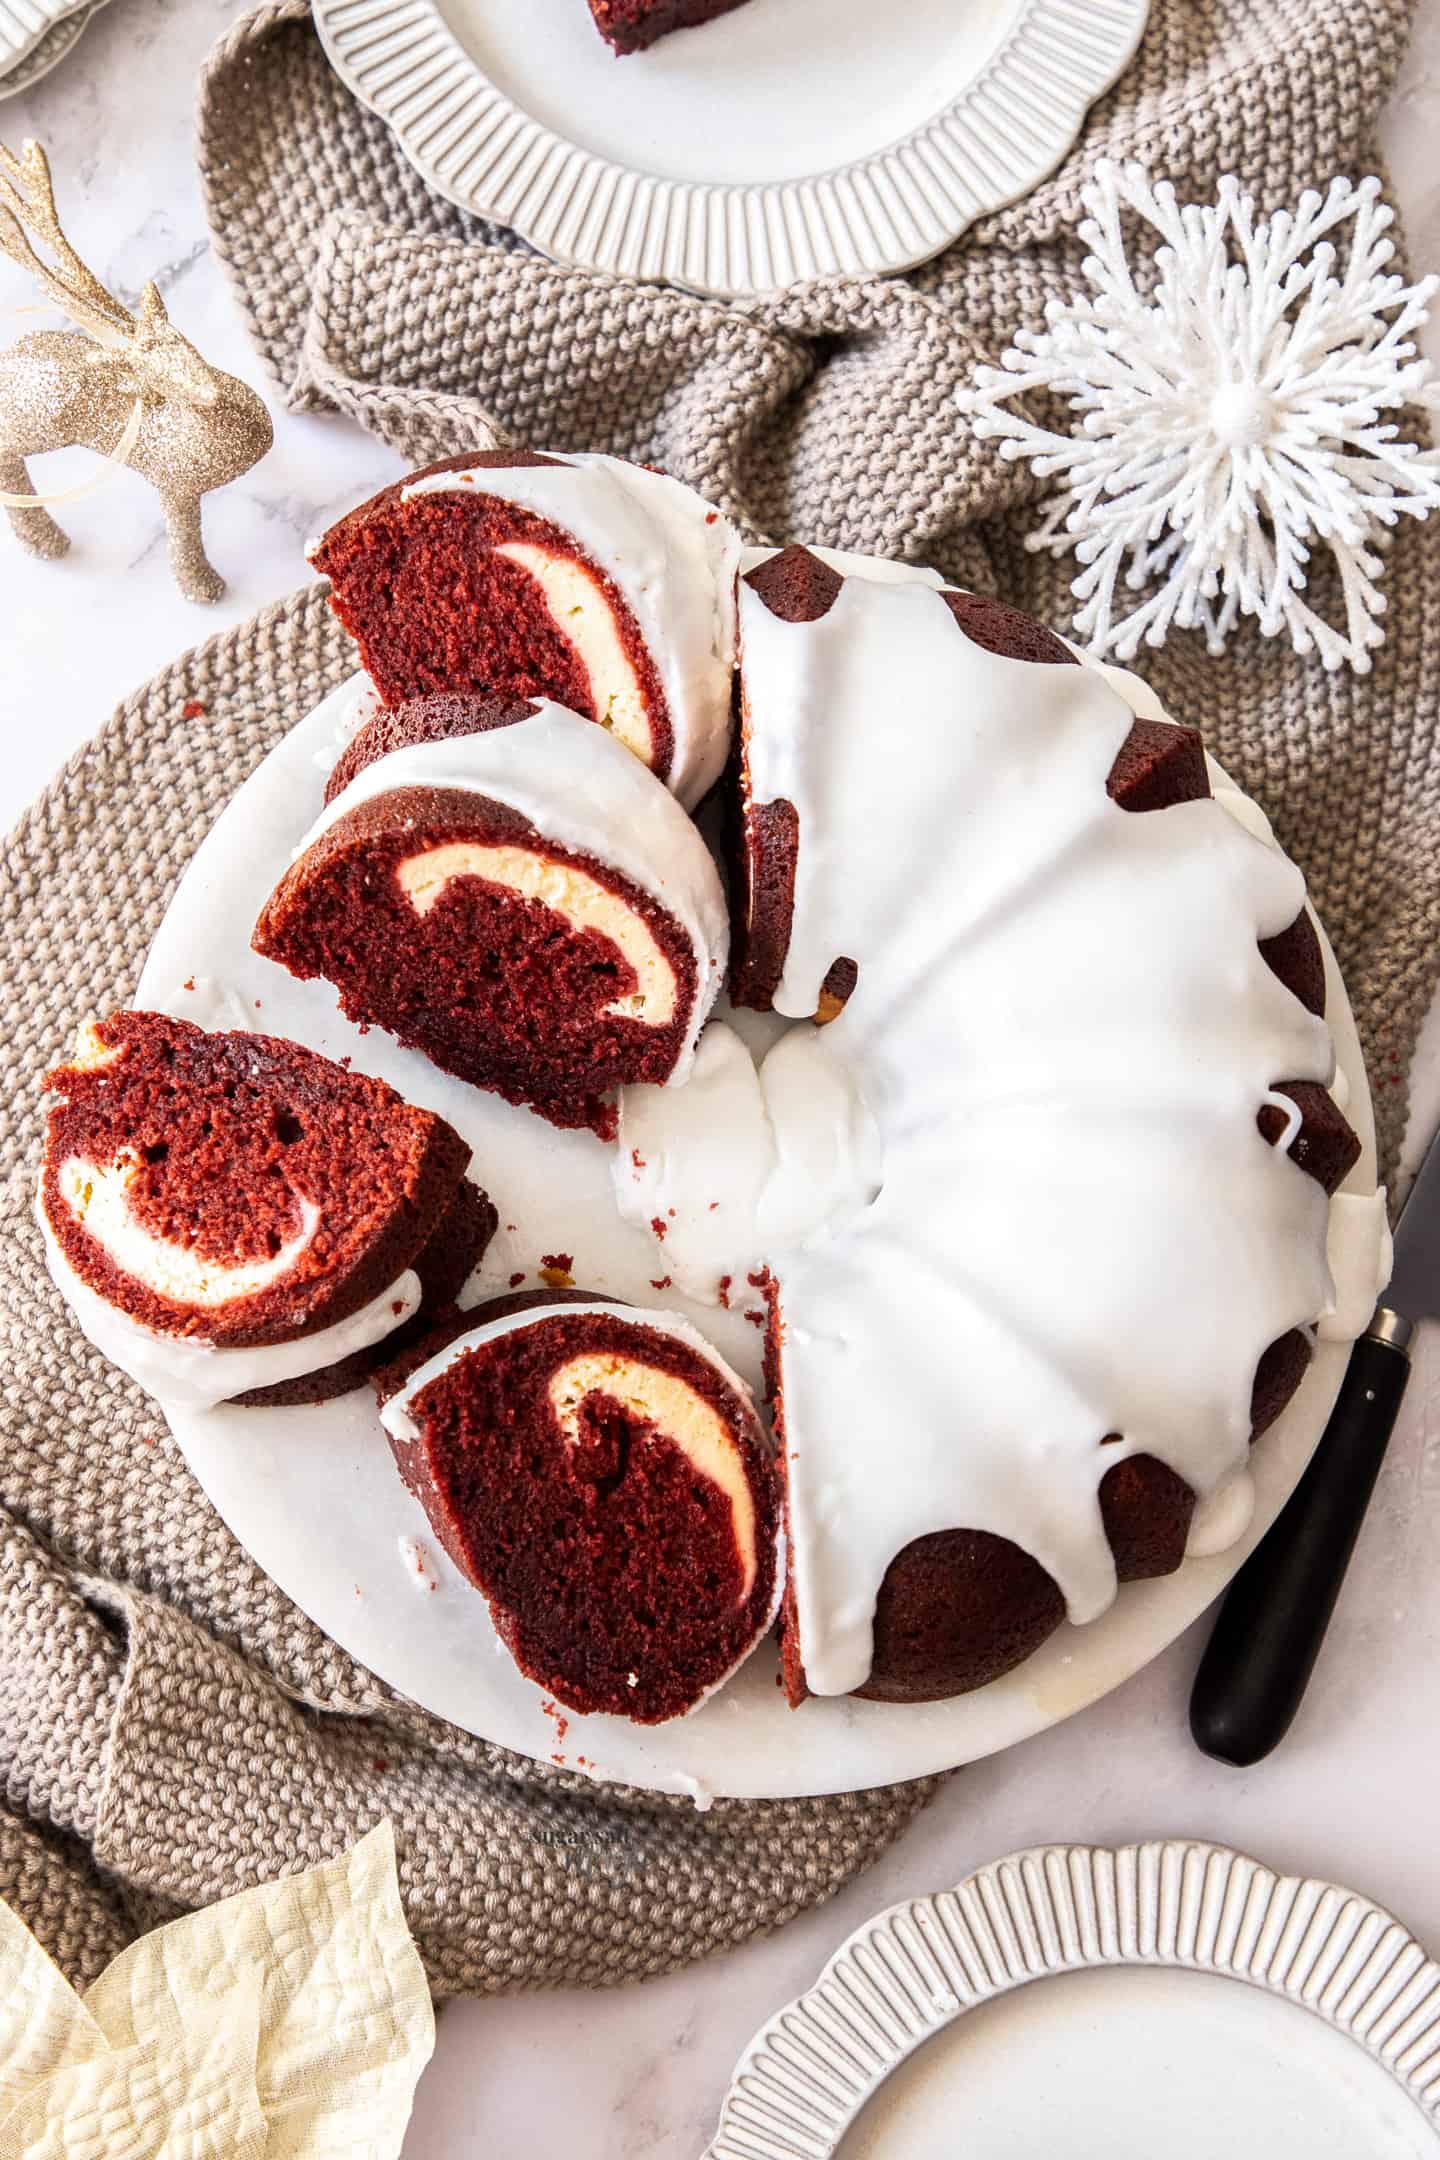 Top down view of a red velvet bundt cake on a white platter.